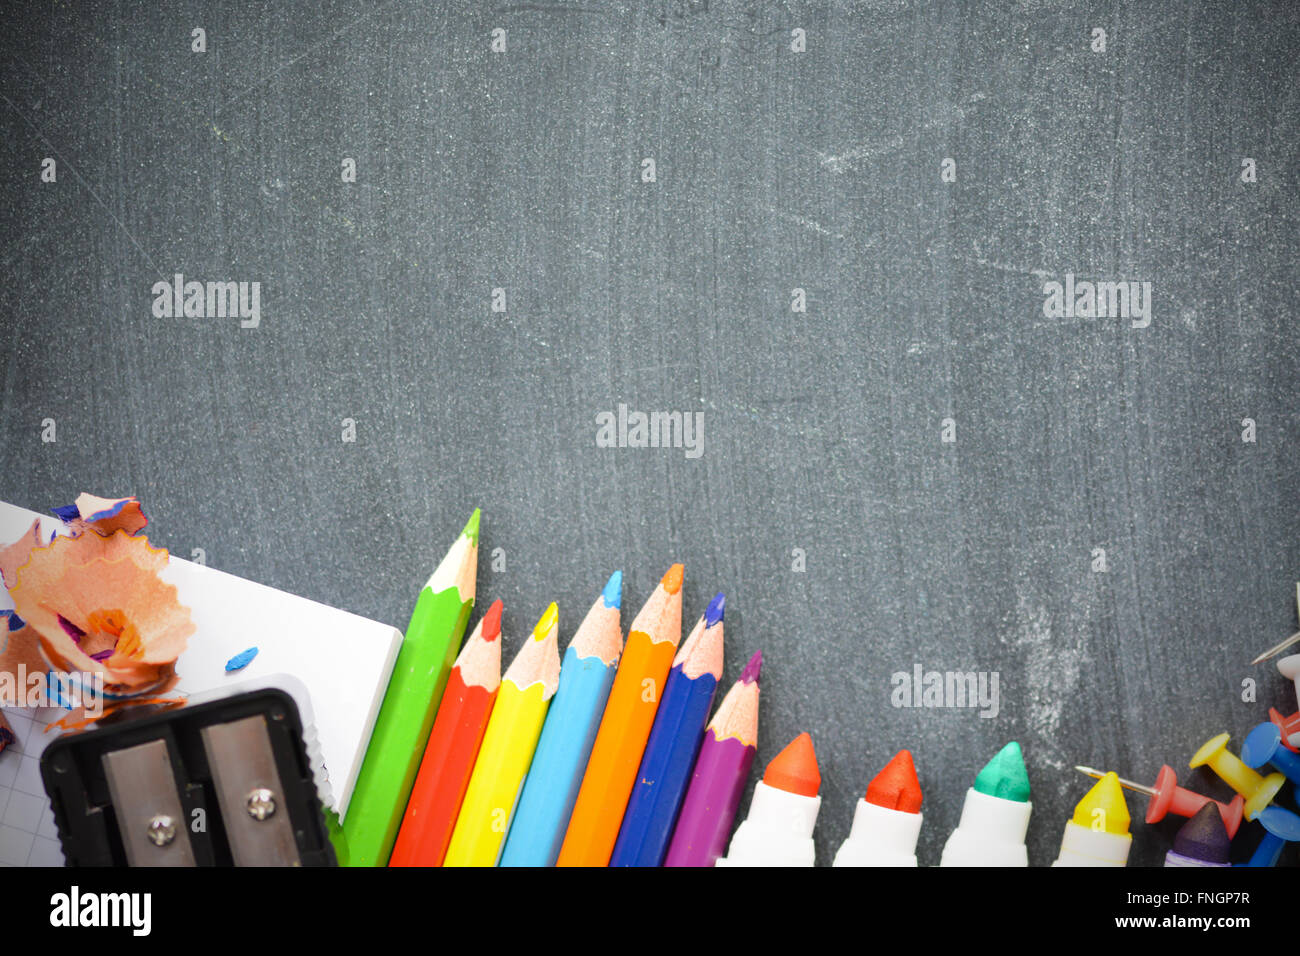 Blackboard background with school supplies suggesting back to school season Stock Photo